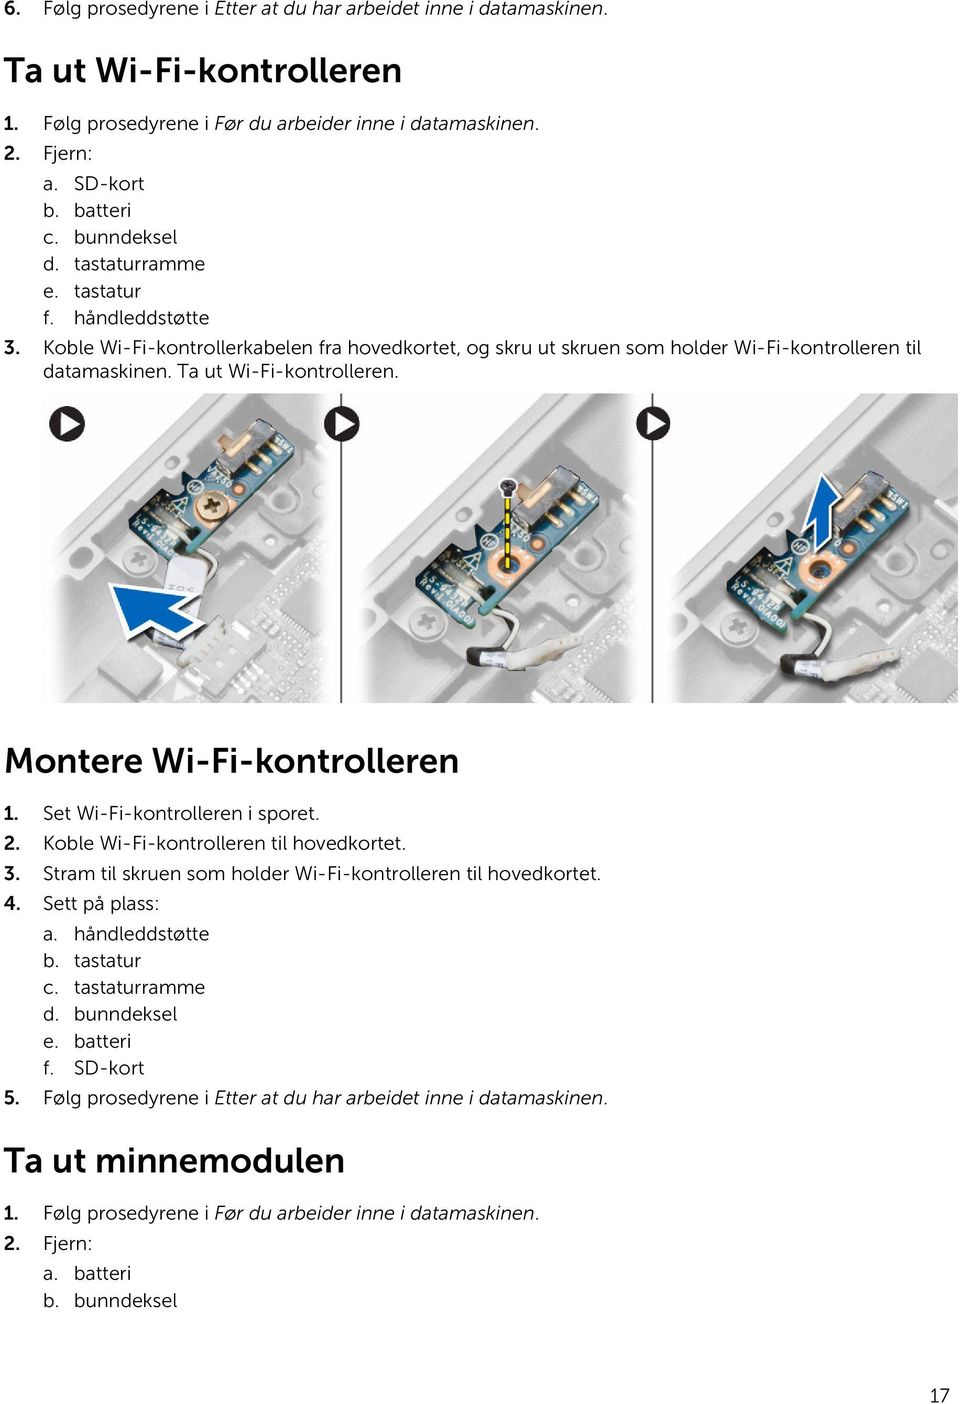 Montere Wi-Fi-kontrolleren 1. Set Wi-Fi-kontrolleren i sporet. 2. Koble Wi-Fi-kontrolleren til hovedkortet. 3. Stram til skruen som holder Wi-Fi-kontrolleren til hovedkortet. 4. Sett på plass: a.